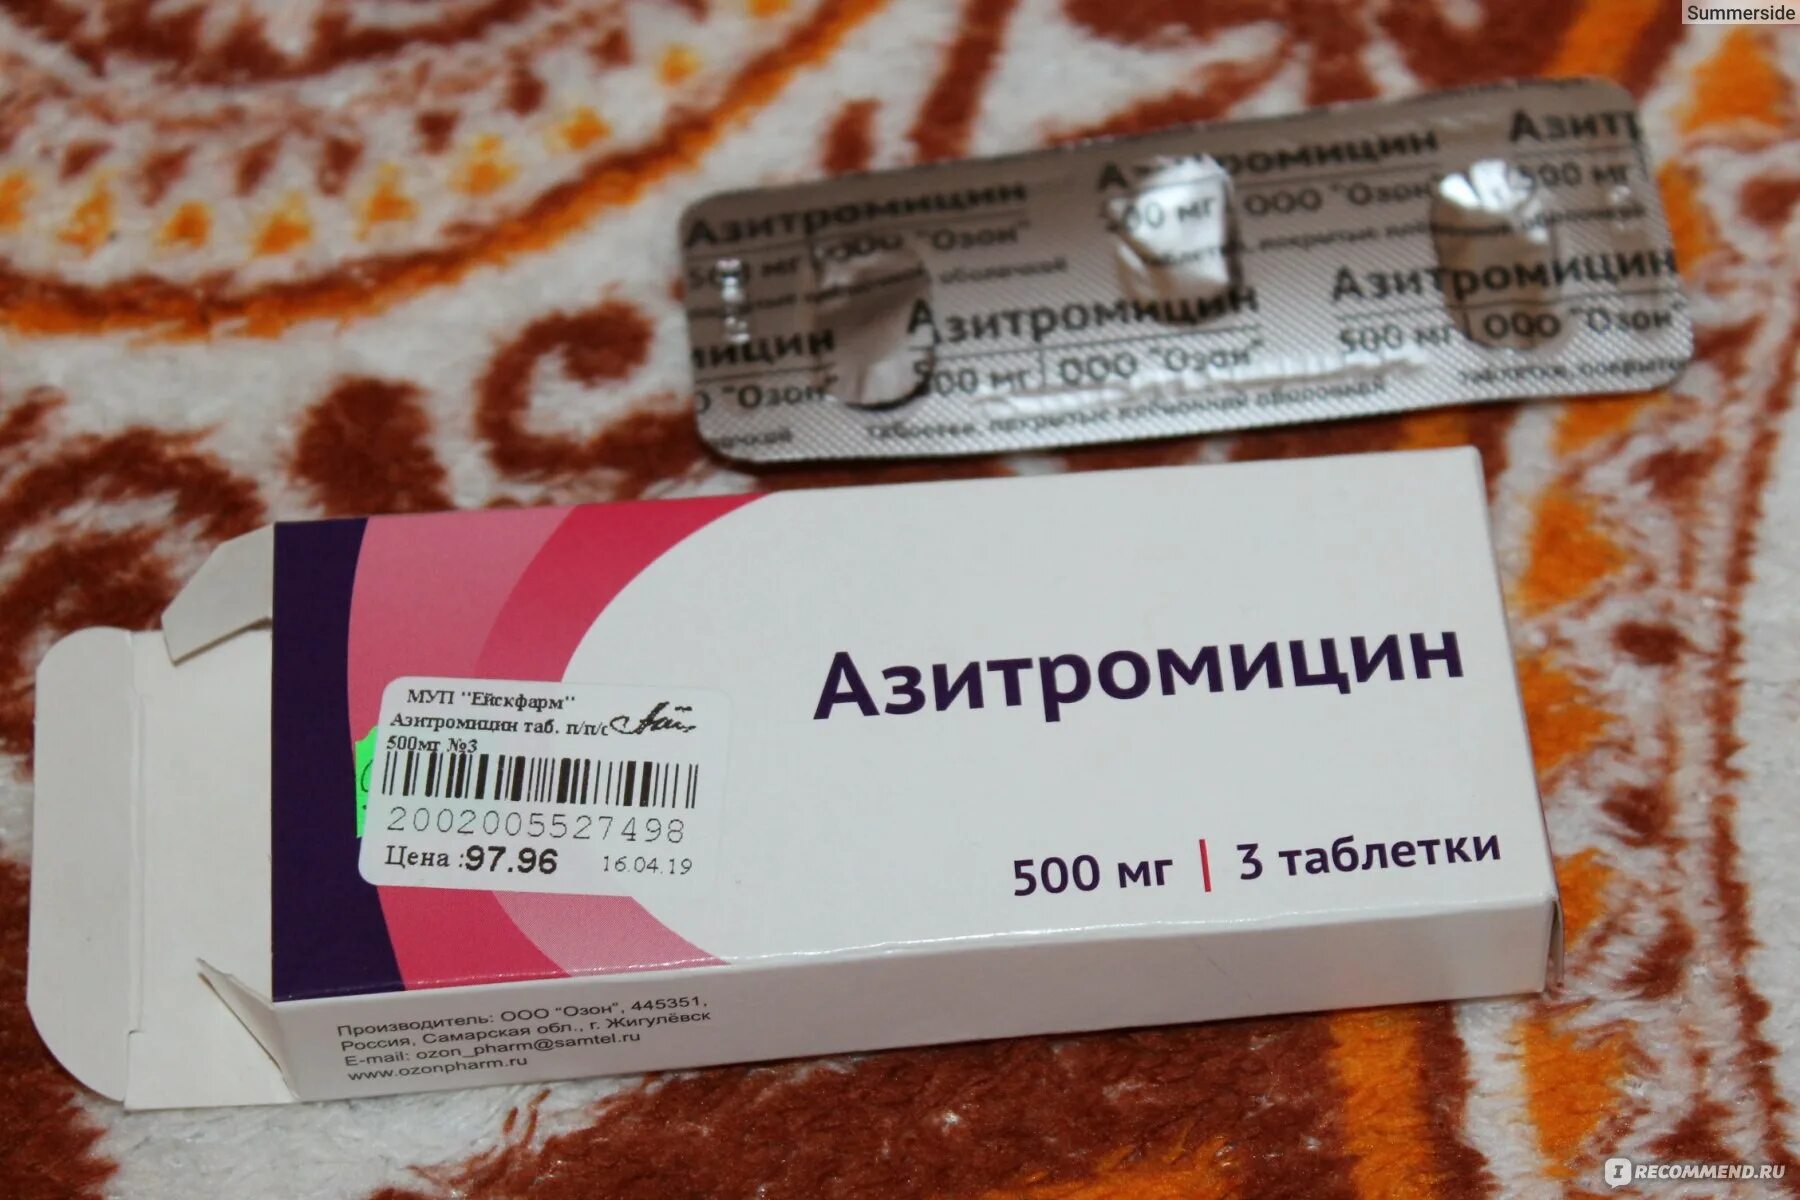 Антибиотик Азитромицин Азитромицин. Антибиотик продаются в аптеке. Антибиотики в аптеке без рецептов. В какой аптеке можно купить антибиотики